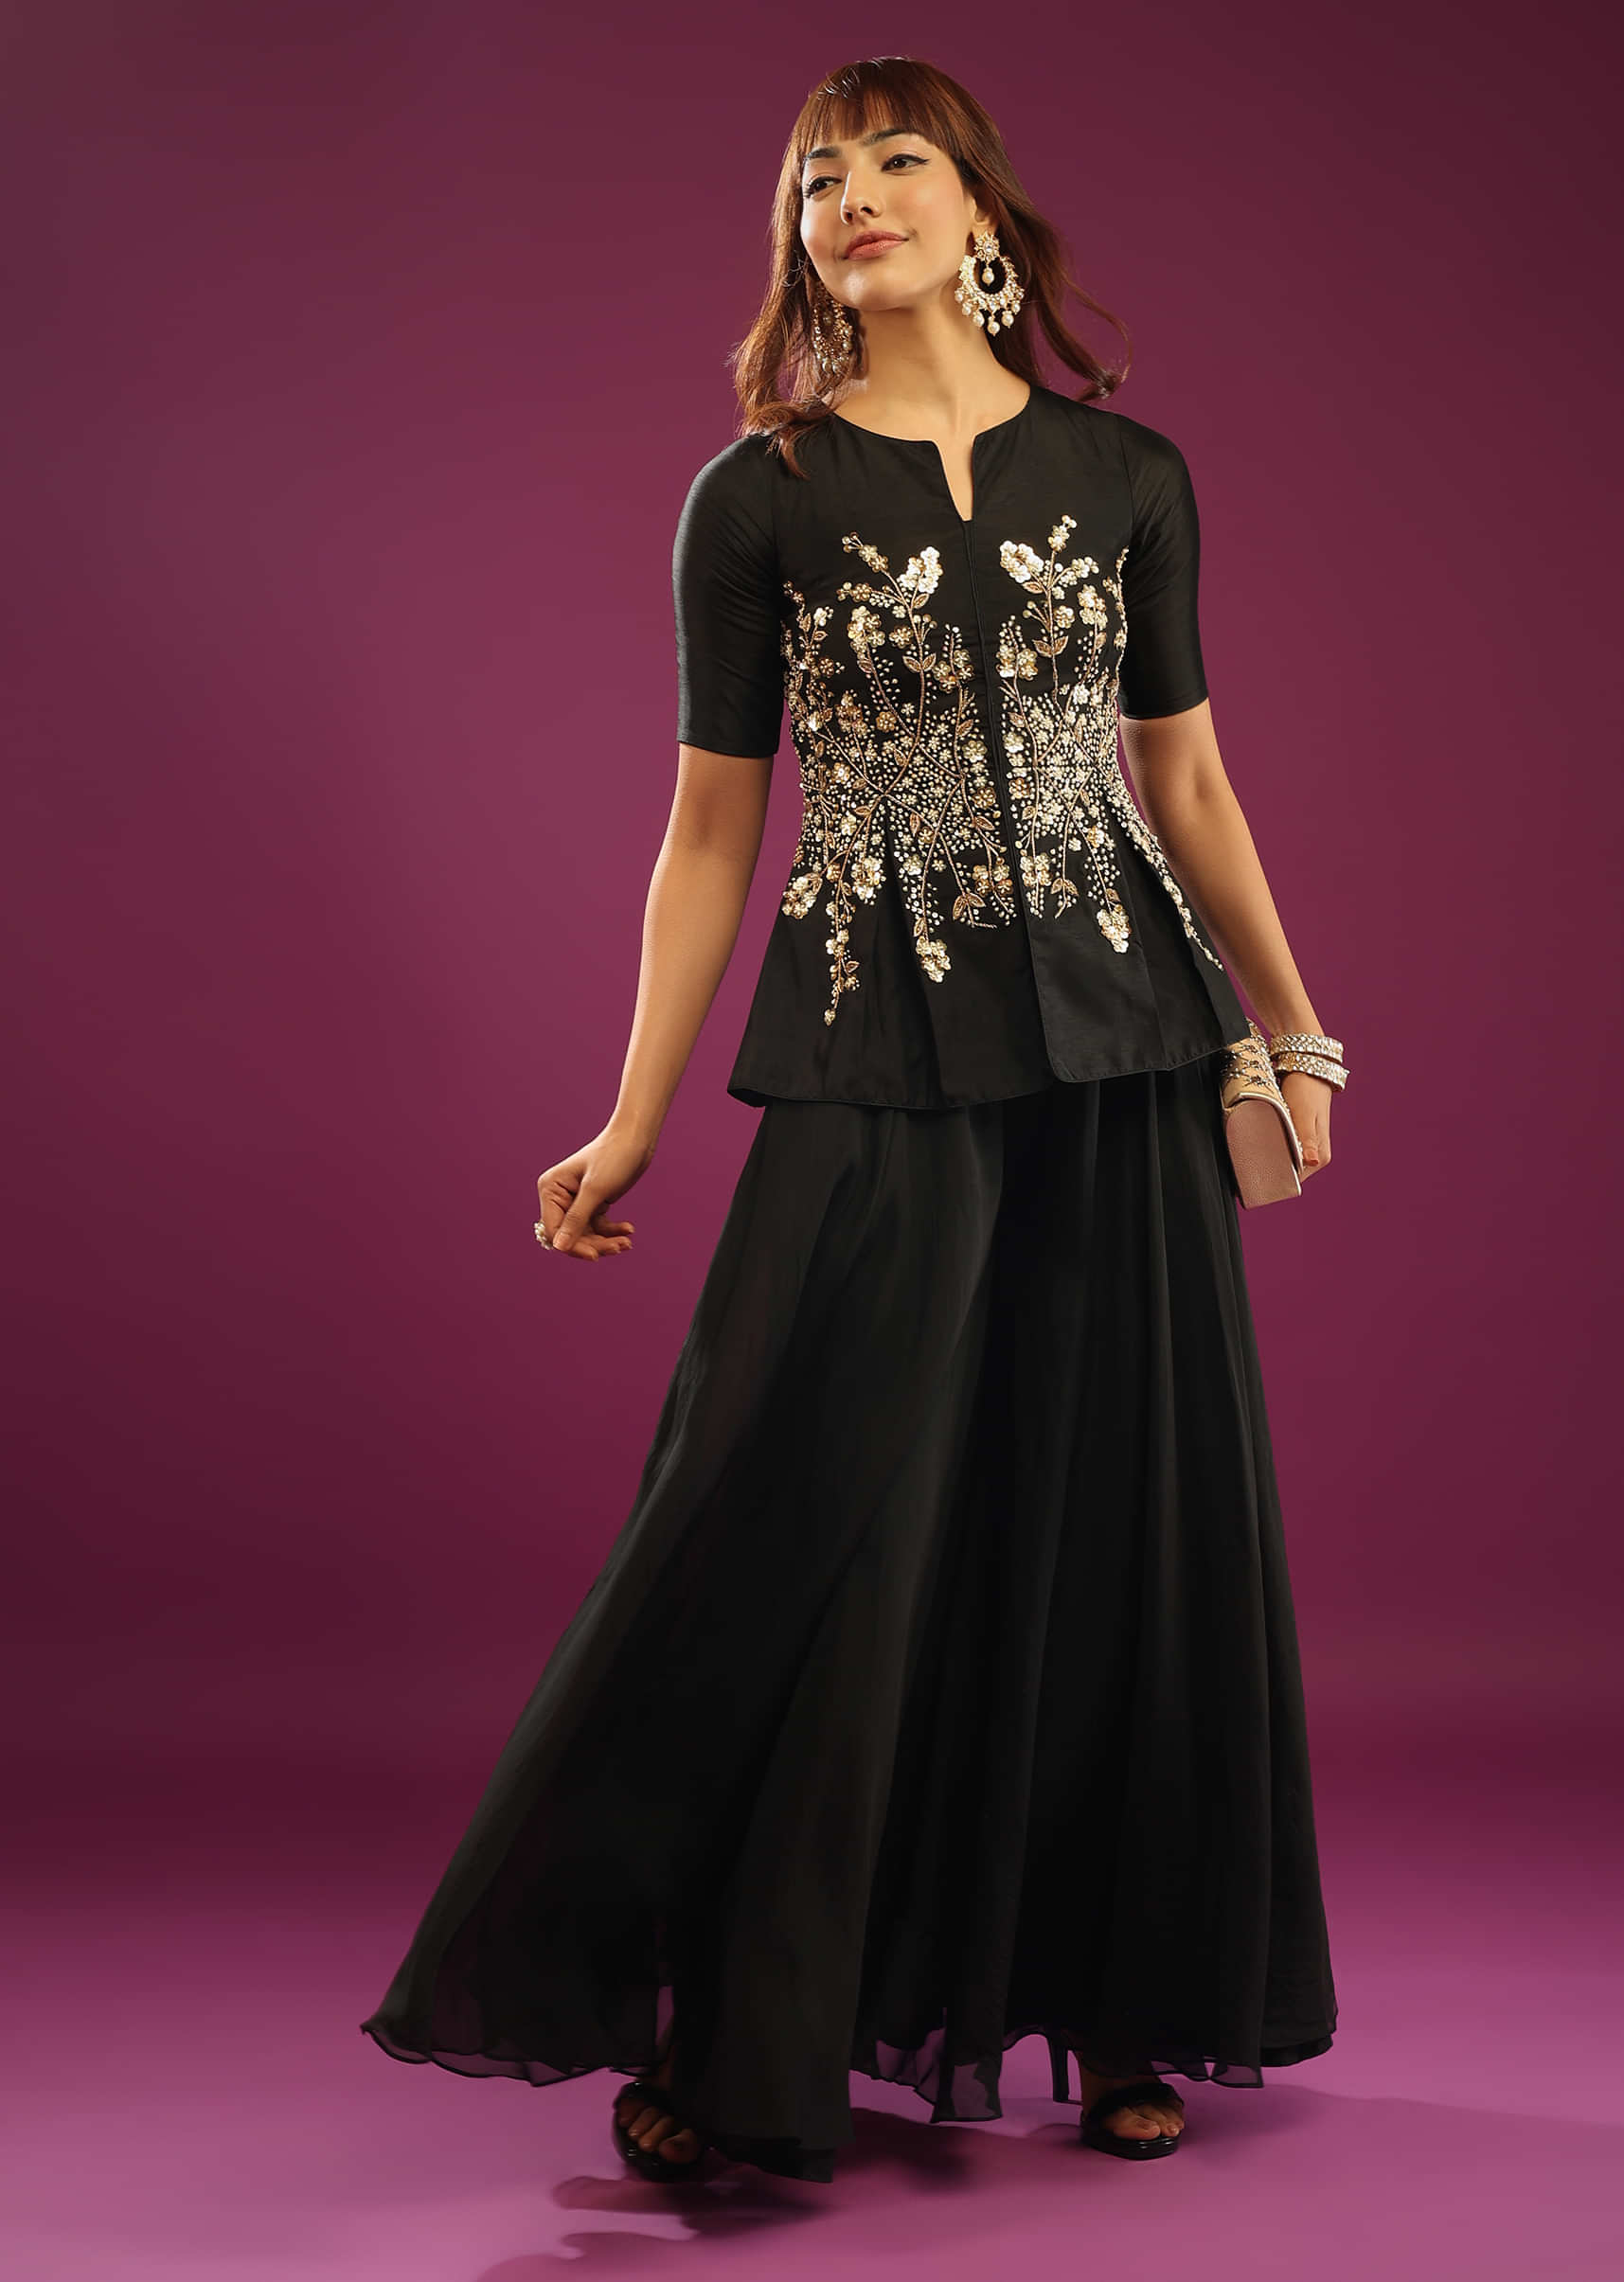 Black Georgette Peplum Top With Lehenga Skirt Dupatta For Women Indian  Wedding Dress Lehenga Choli Lengha Choli Indian Lengha Choli |  centenariocat.upeu.edu.pe